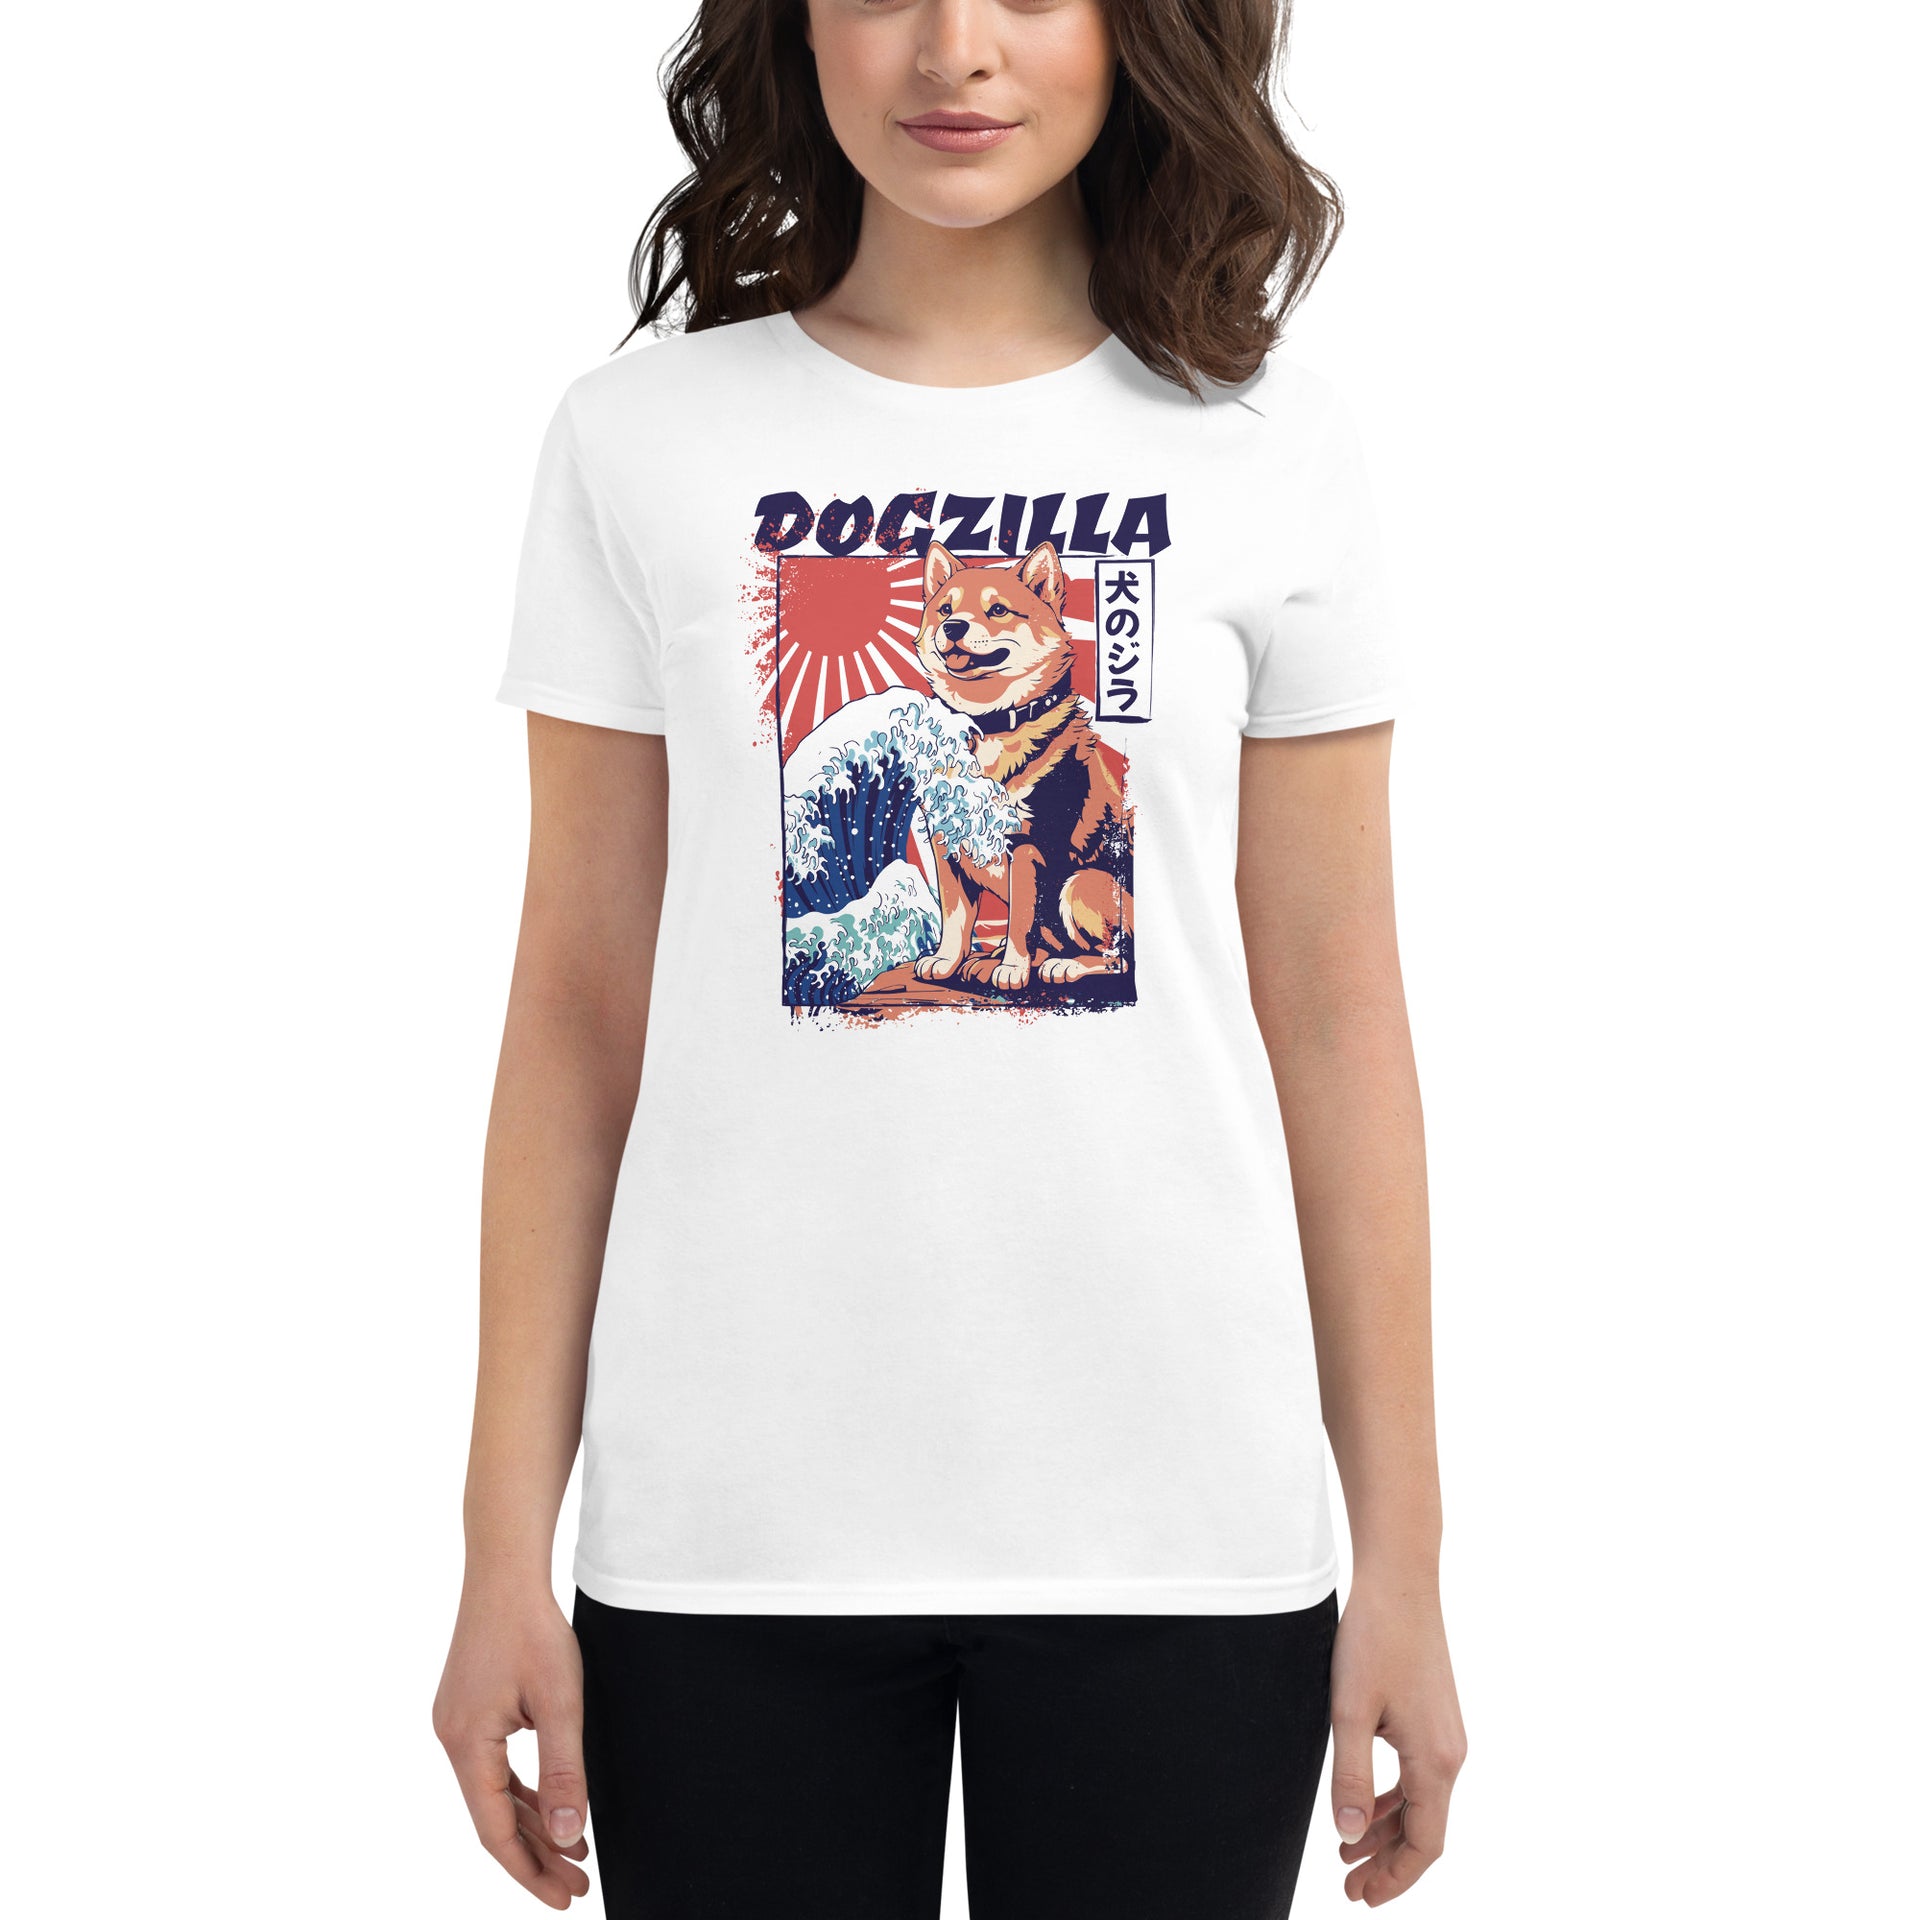 Japanese Dogzilla Women's T-Shirt